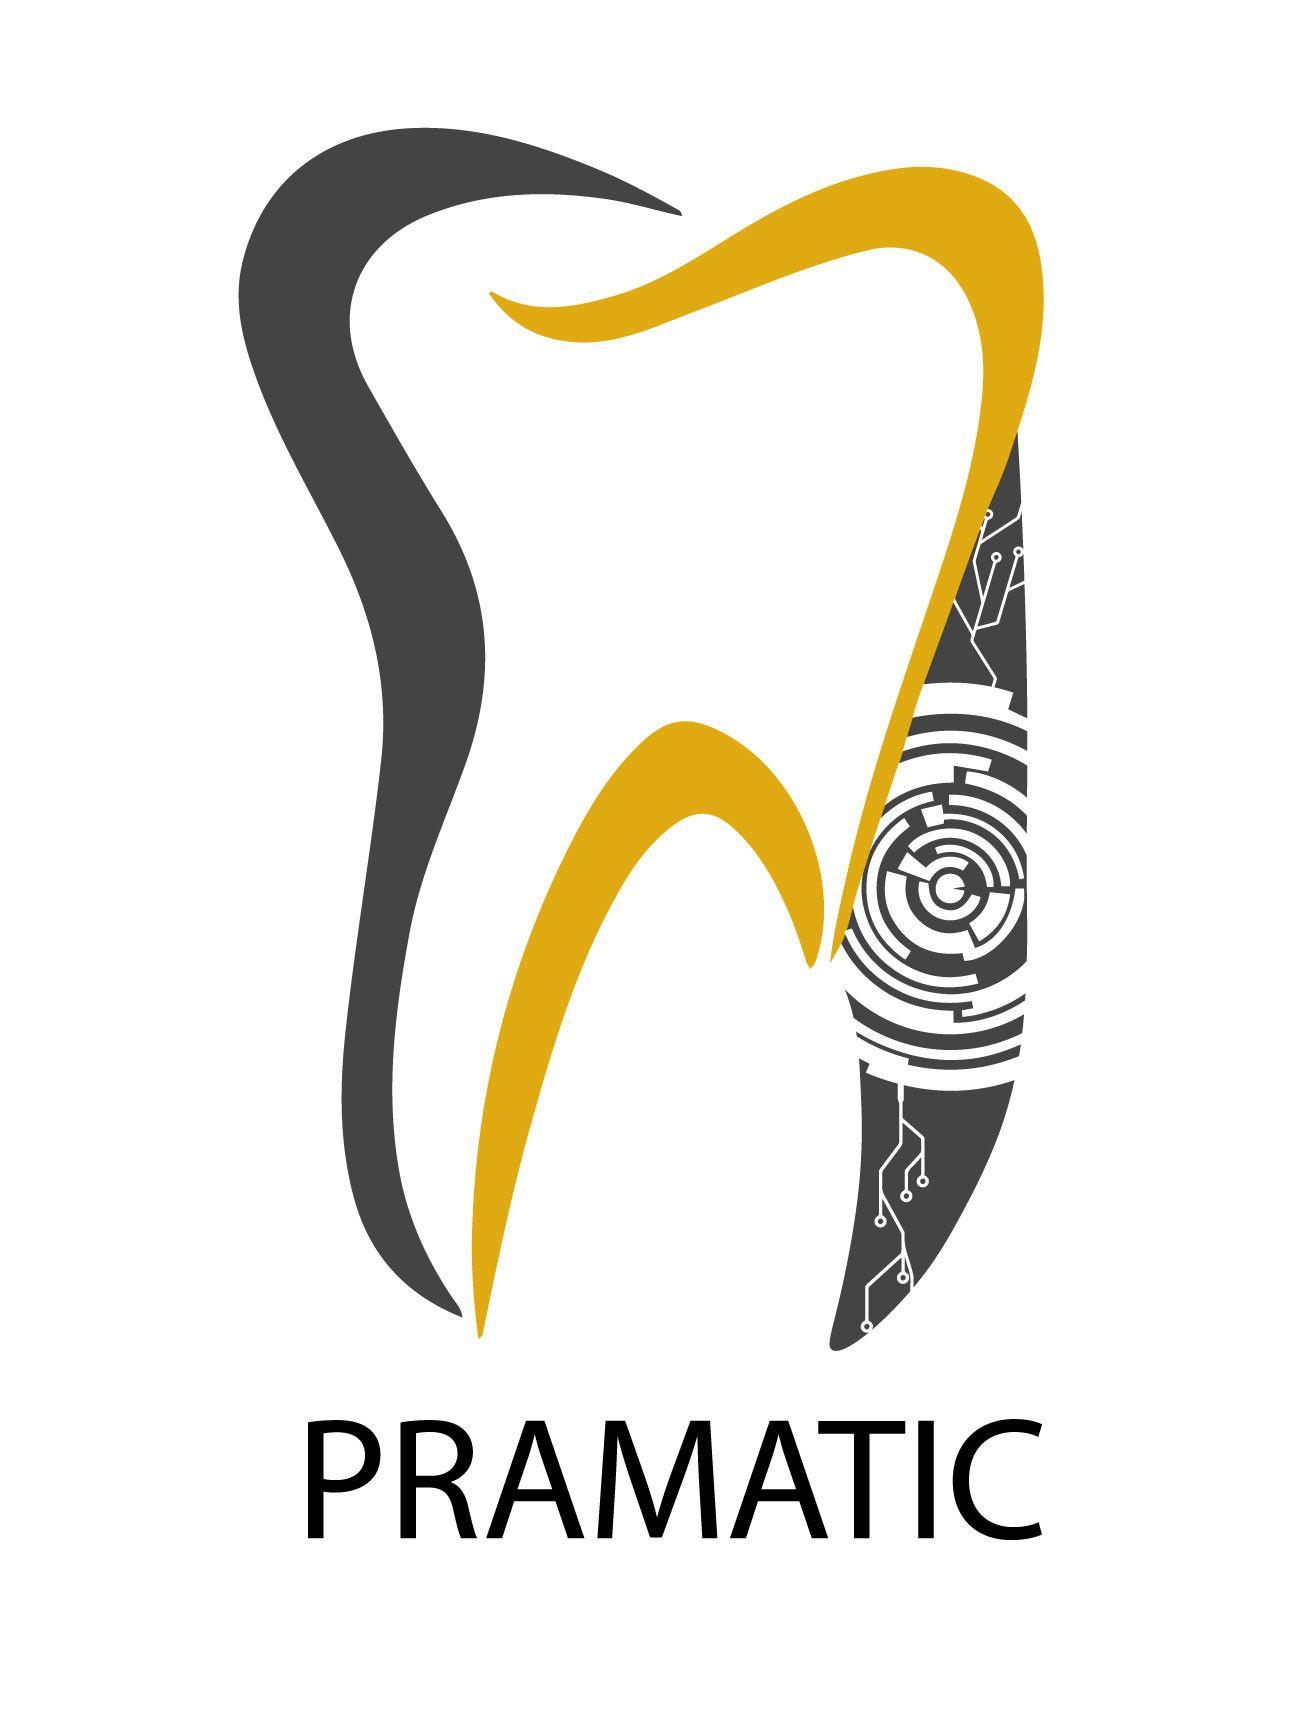 Yamato Logo - Pramatic Logo design, dante yamato